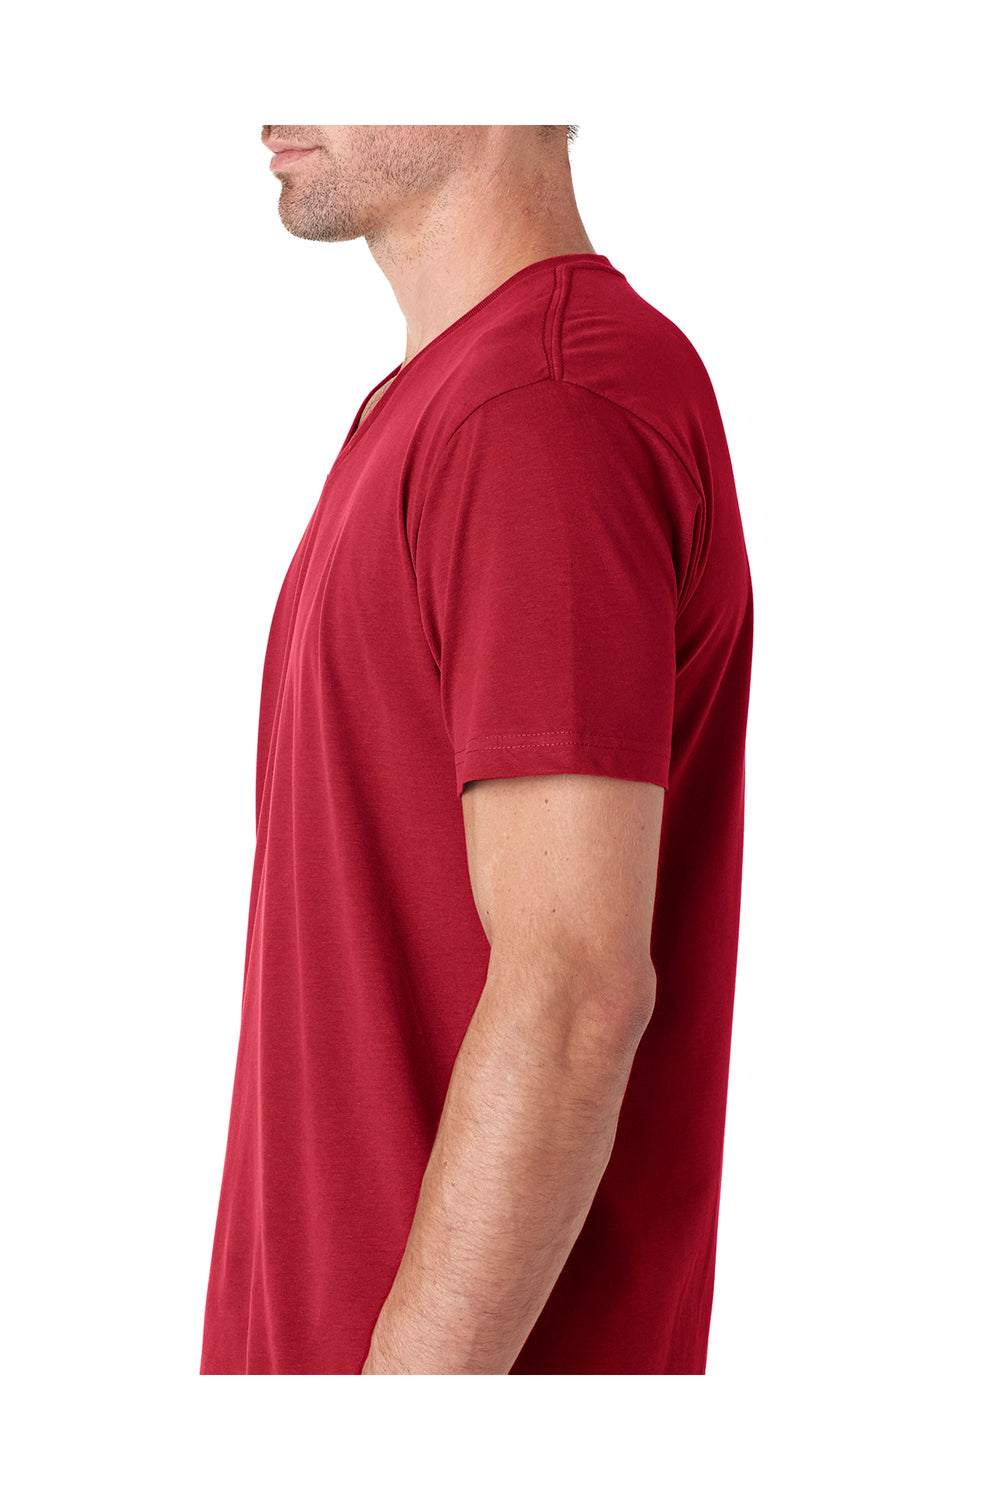 Next Level 6440 Mens Sueded Jersey Short Sleeve V-Neck T-Shirt Cardinal Red Side